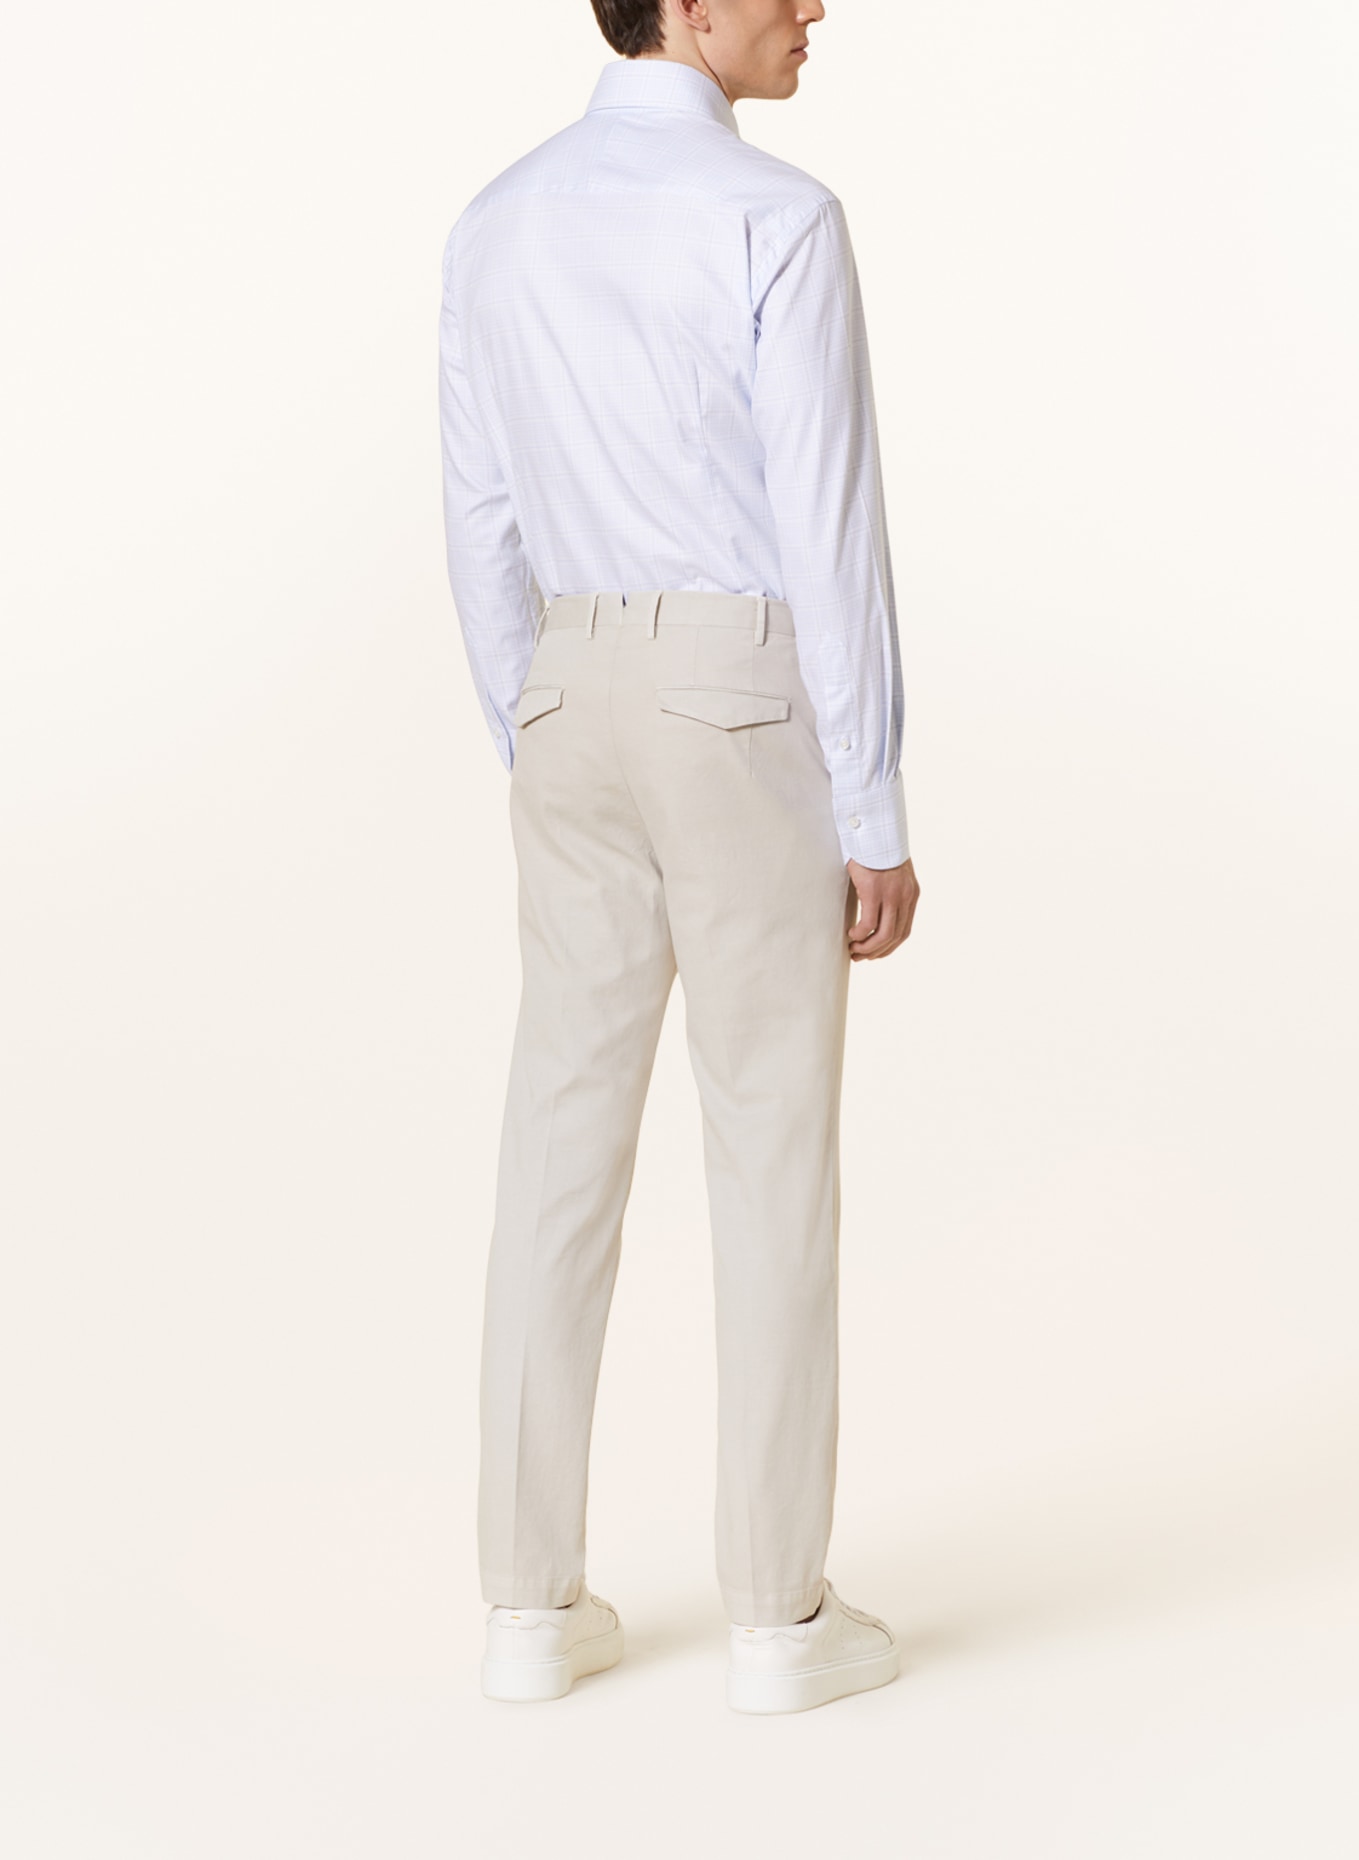 ARTIGIANO Shirt fitted fit, Color: LIGHT BLUE/ WHITE (Image 3)